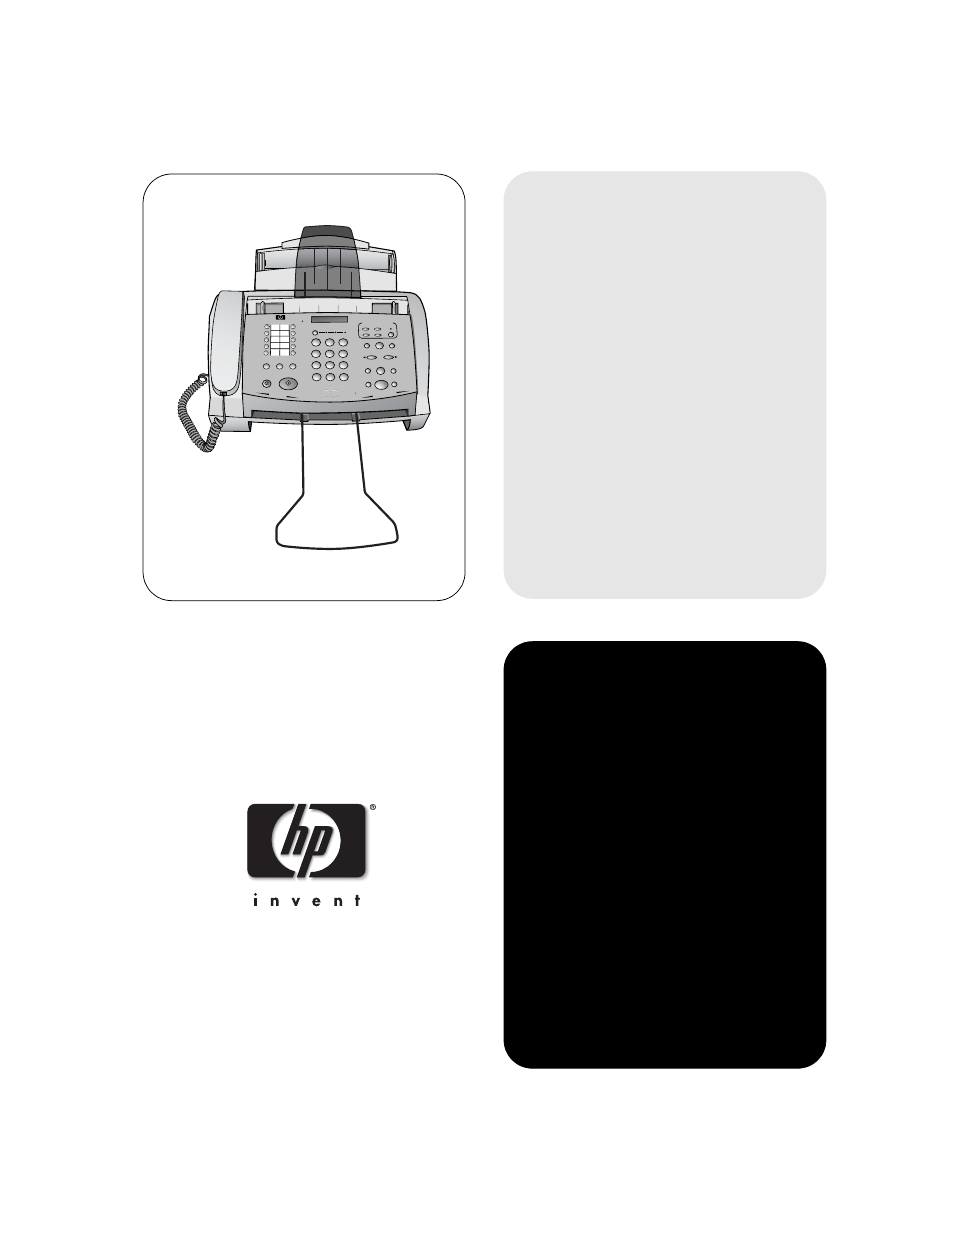 Hp Laserjet 1020 Printer User Manual